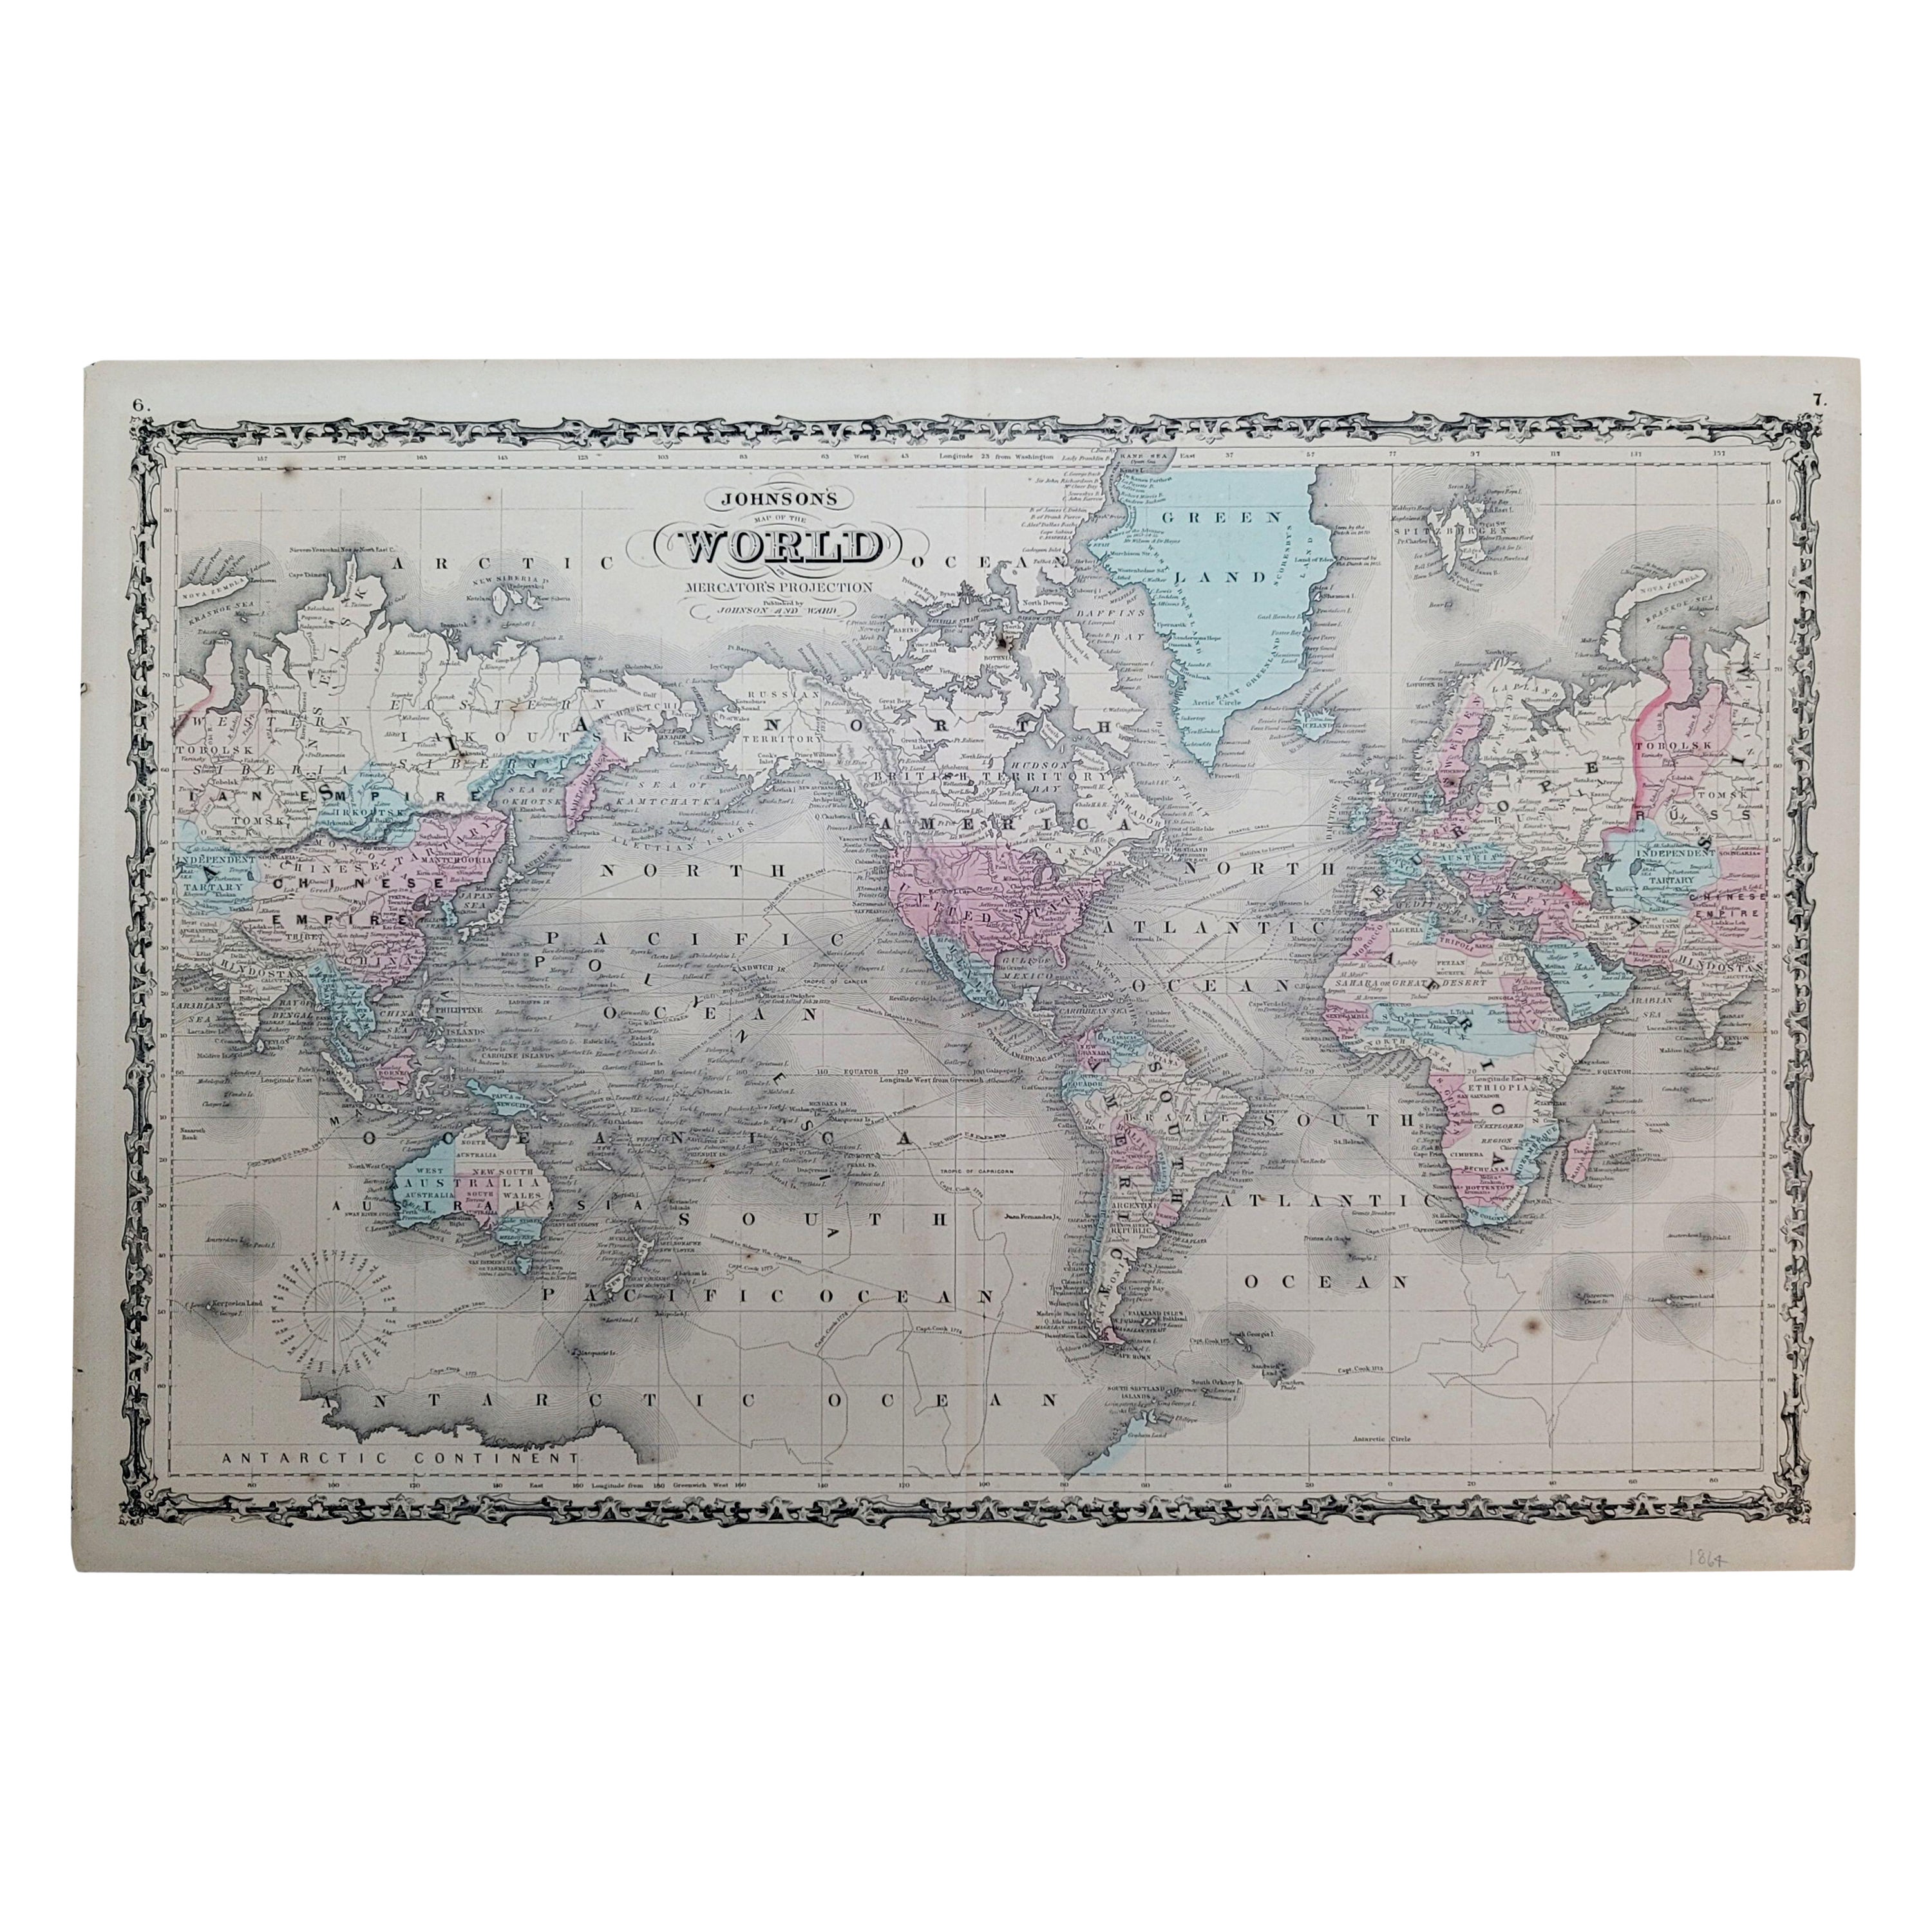 1864 Johnson's Map of the World auf Mercator's Projection, Ric.B009